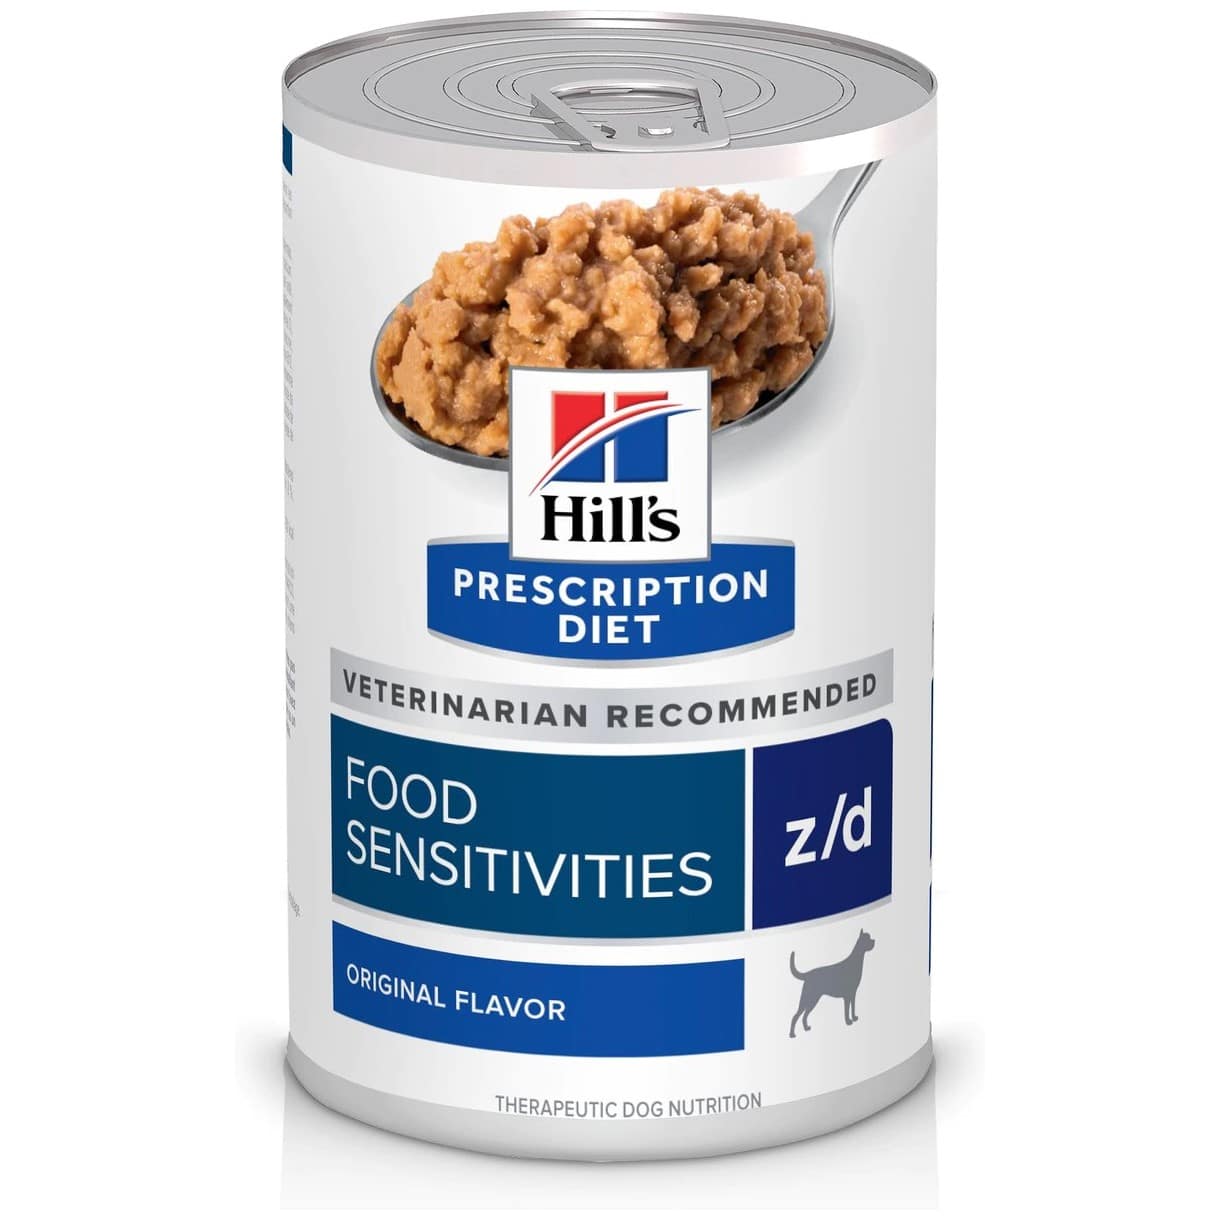 Hill's Prescription Diet zd SkinFood Sensitivities Original Flavor Wet Dog Food